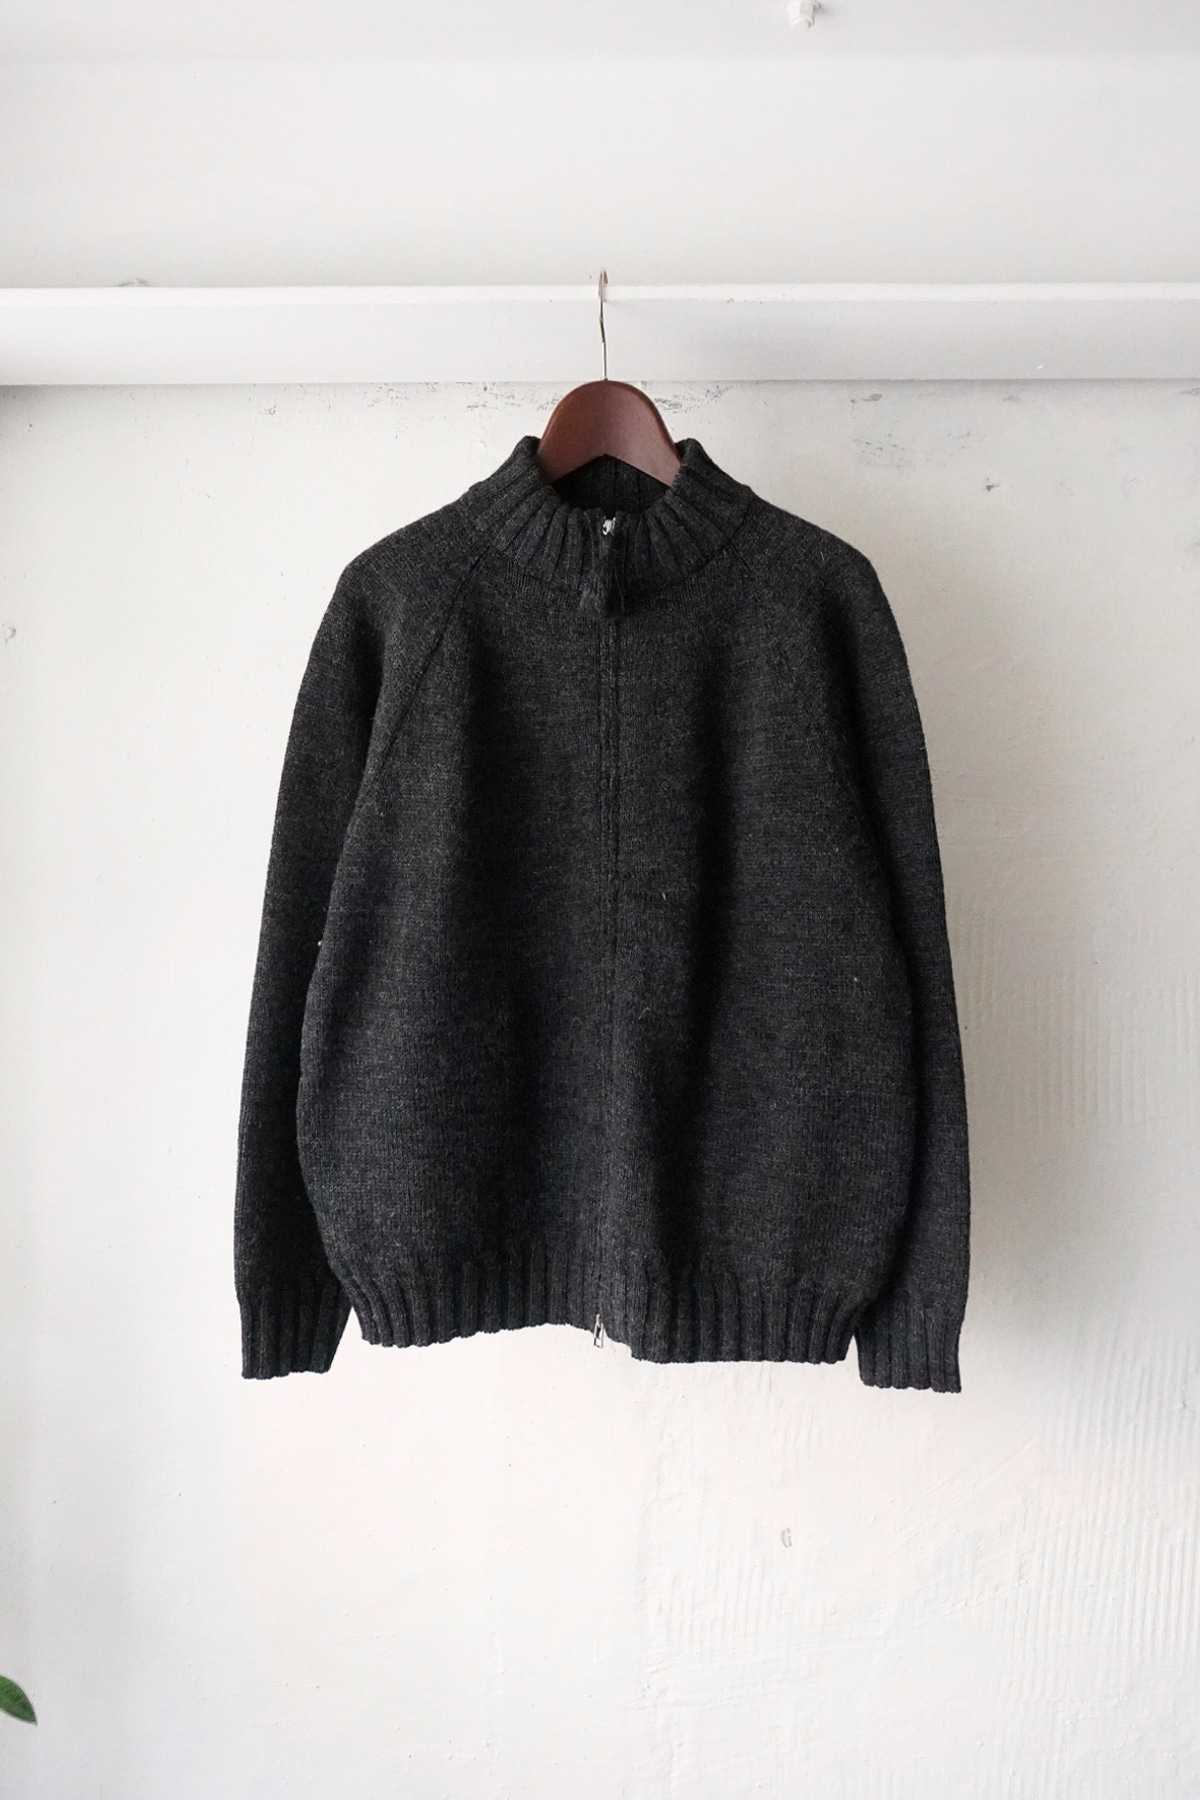 [OLD JOE BRAND] Tweedy Yarn Zip Sweater - Graphite